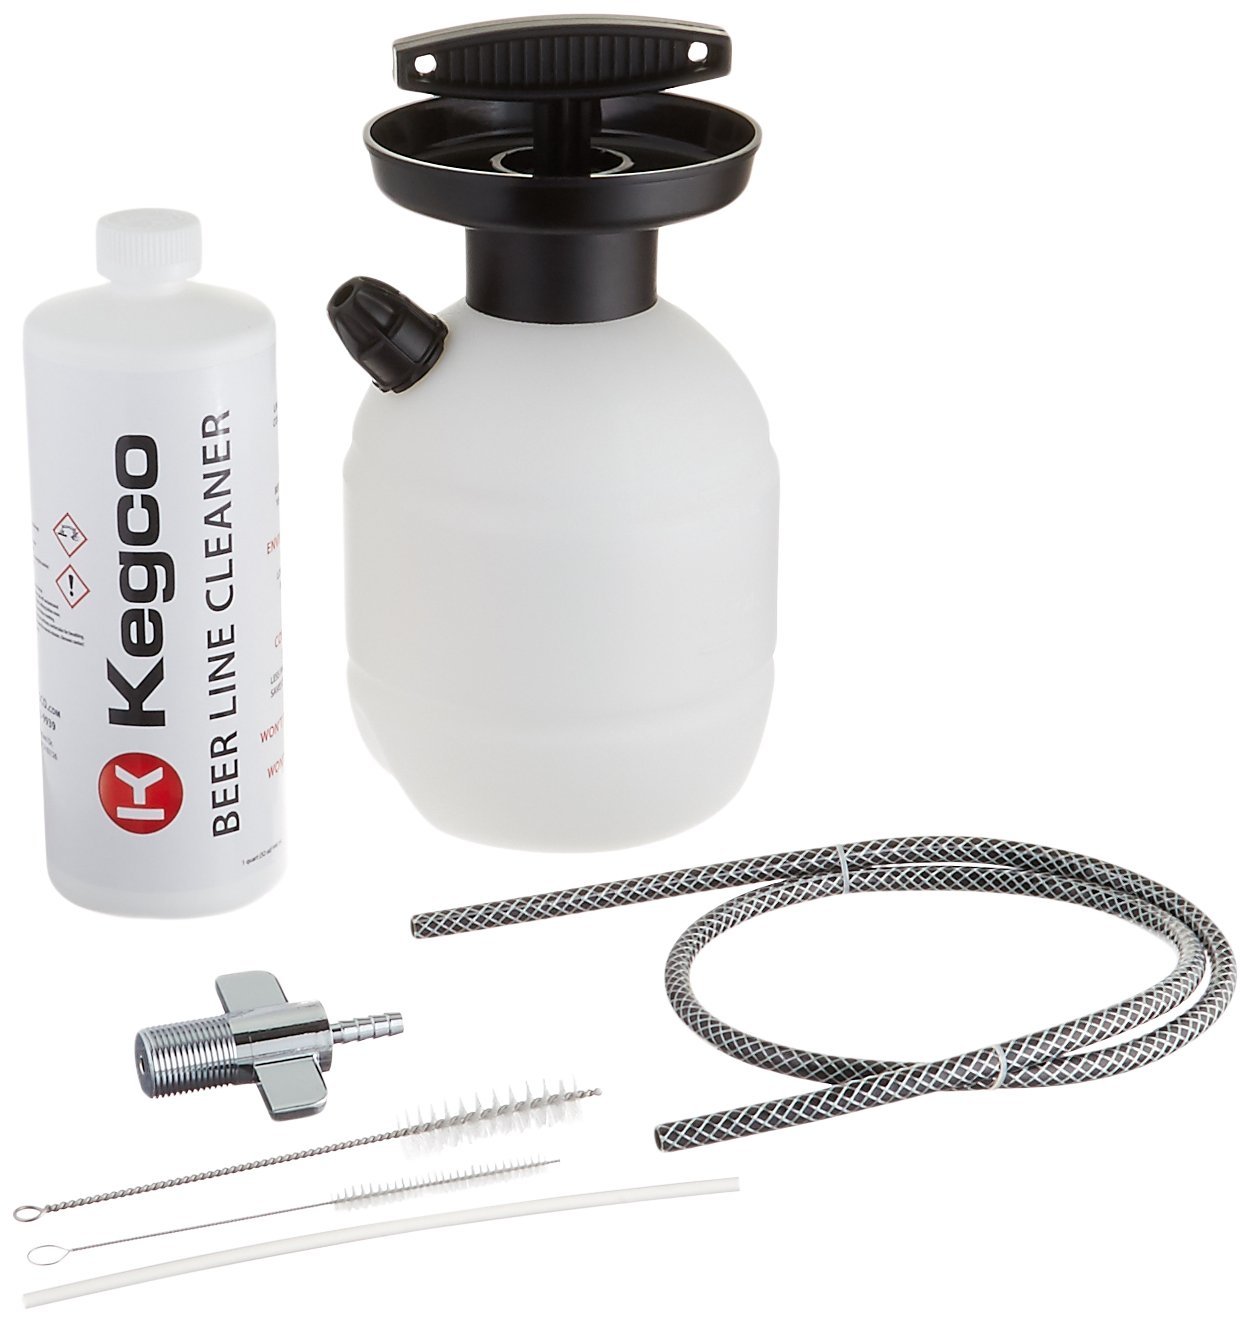 Kegco BF KPCK32 Deluxe Hand Pump Pressurized Keg Beer Cleaning Kit with 32 oz Cleaner, Black